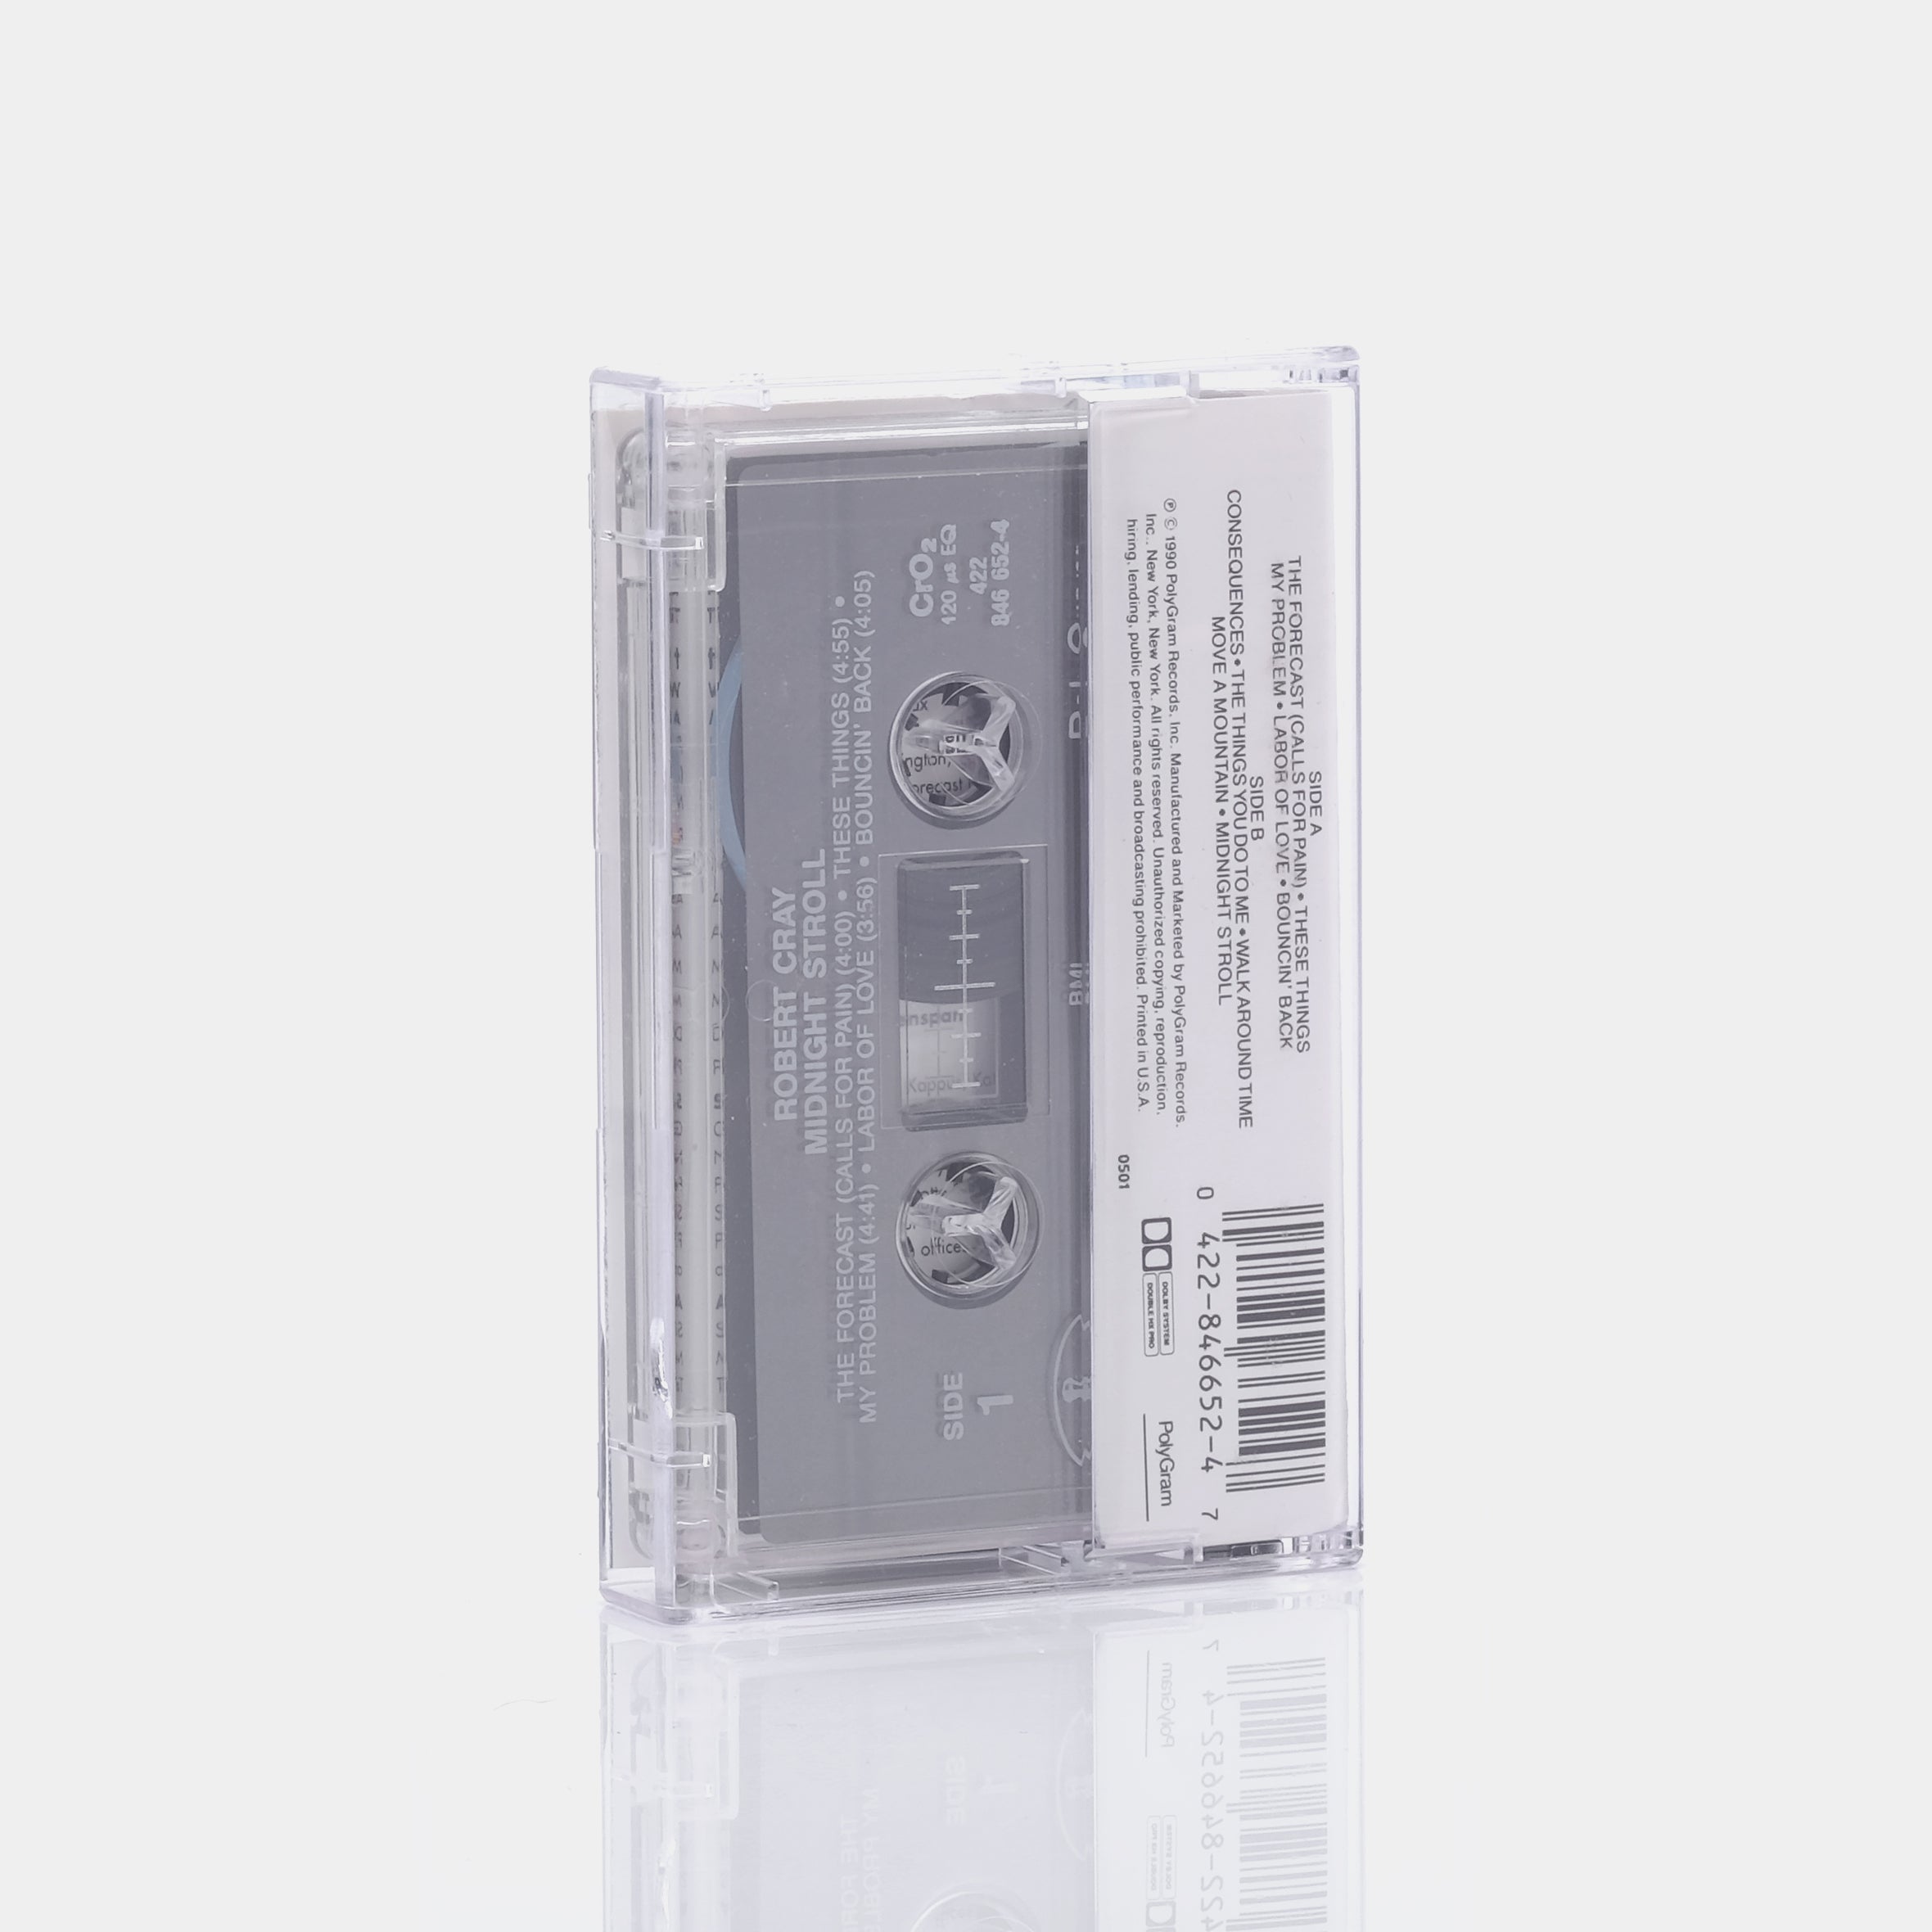 Robert Cray - Midnight Stroll Cassette Tape